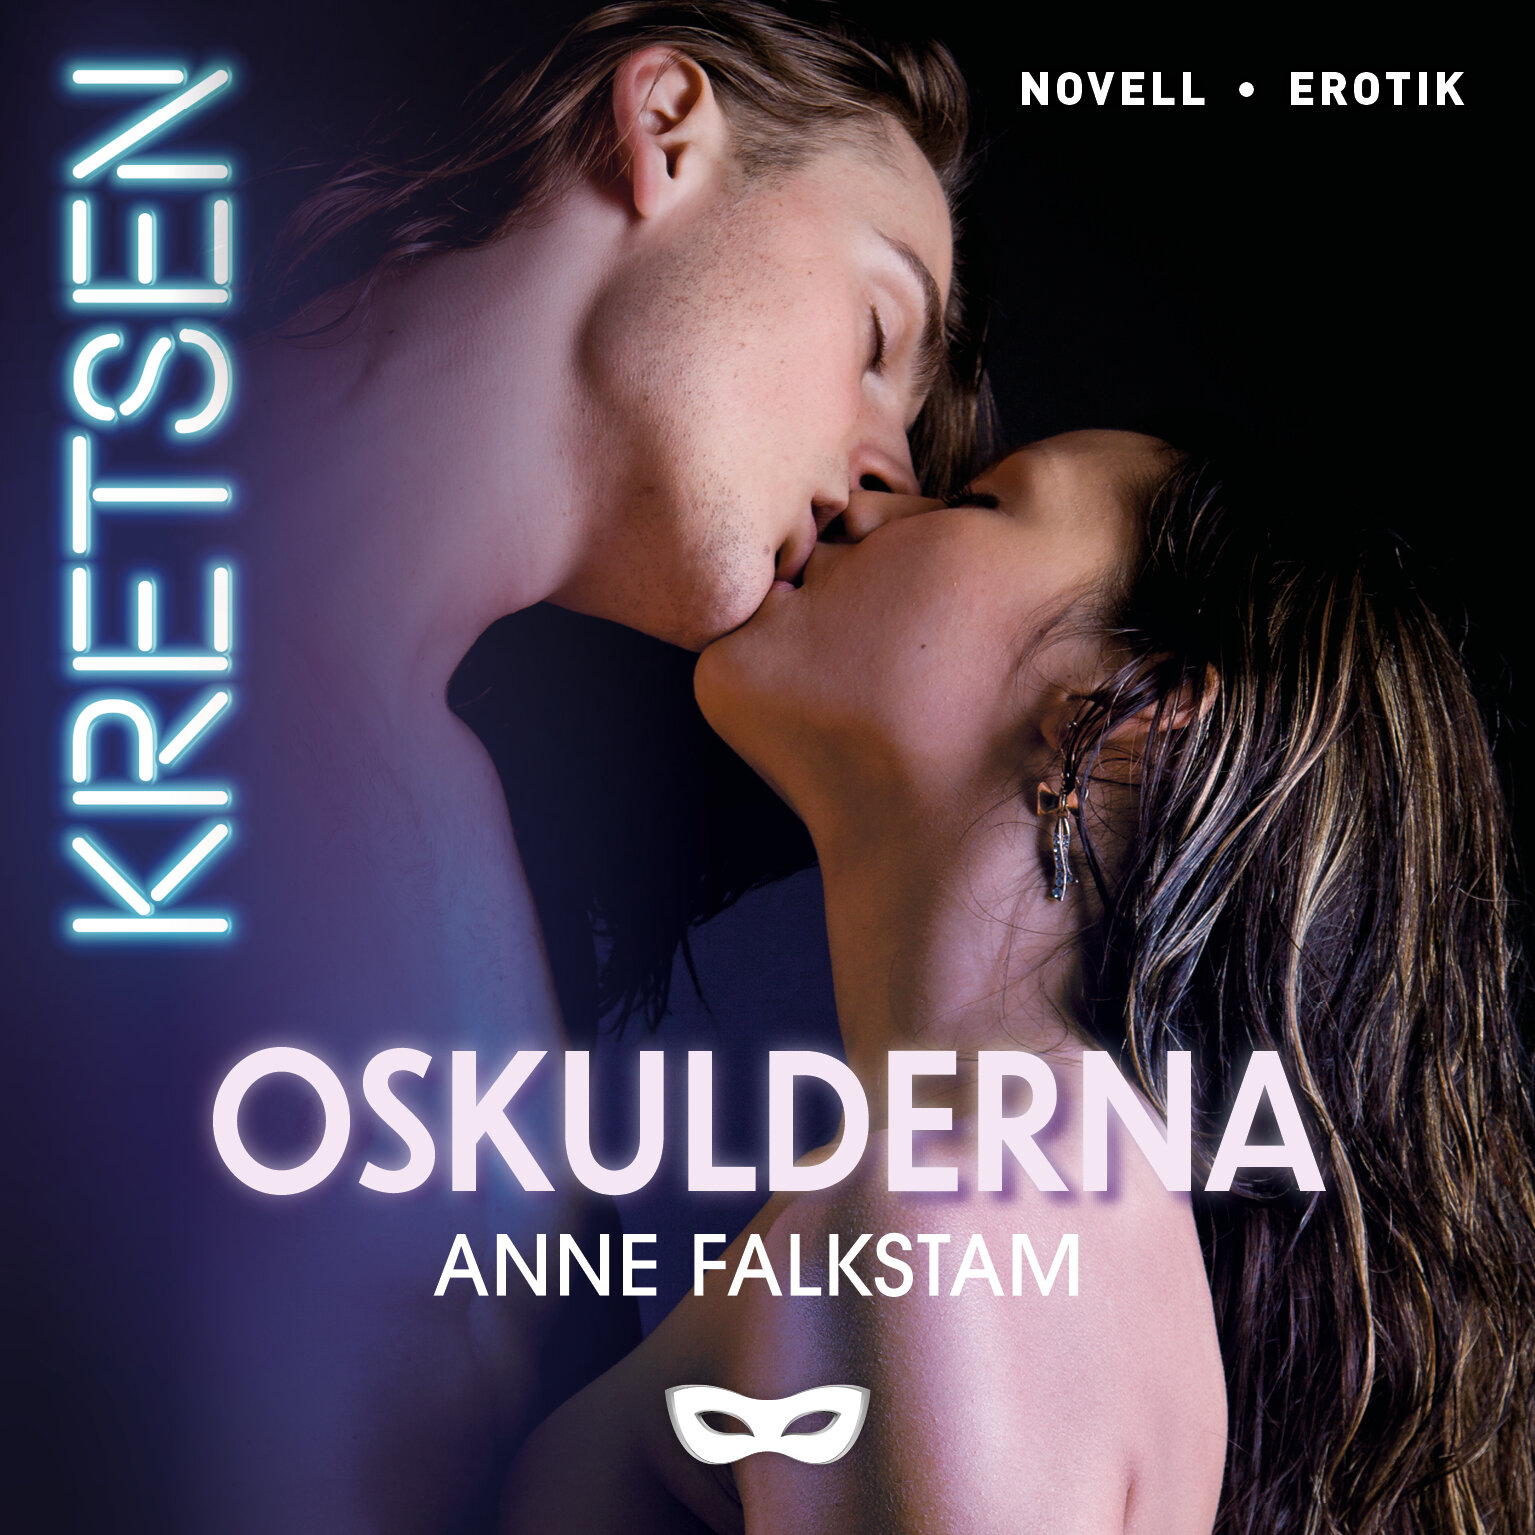 KRETS2 Anne Falkstam Oskulderna omslag Audio.jpg